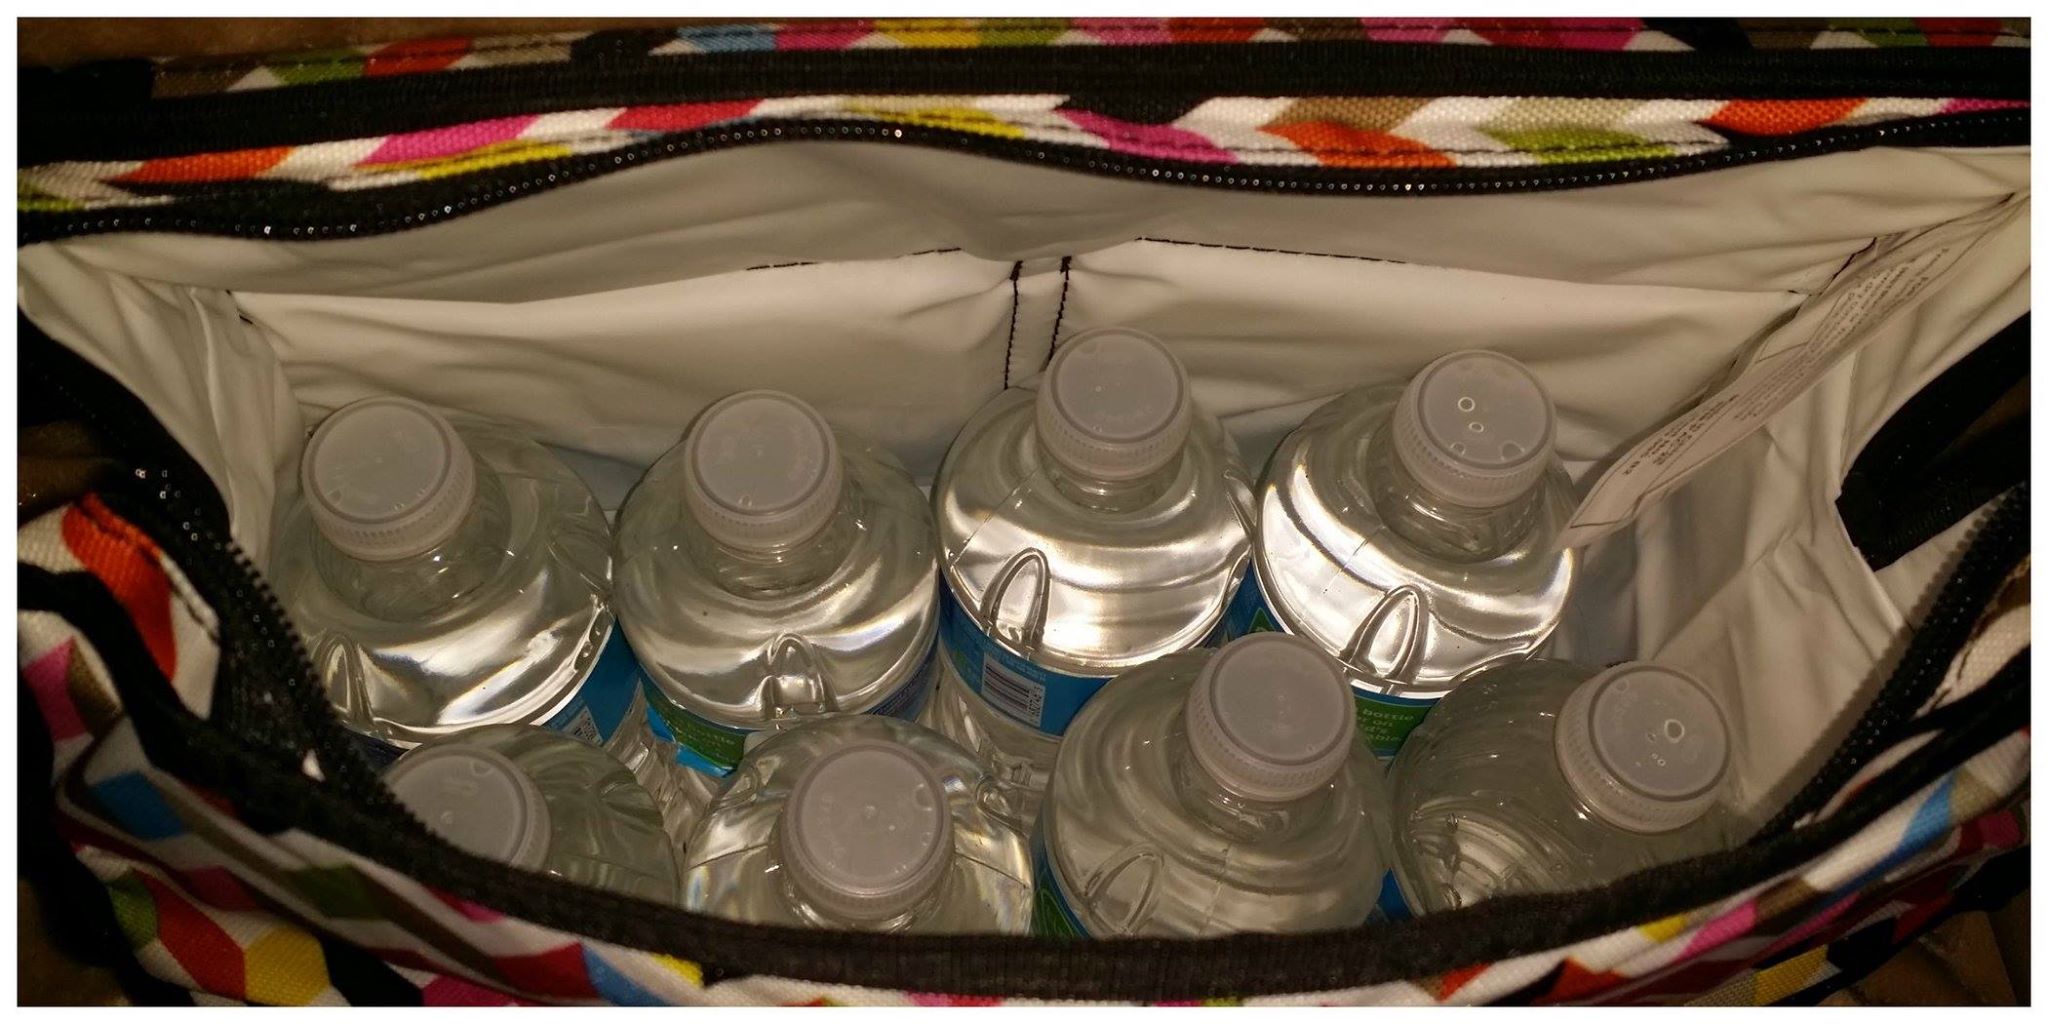 packit freezable picnic bag